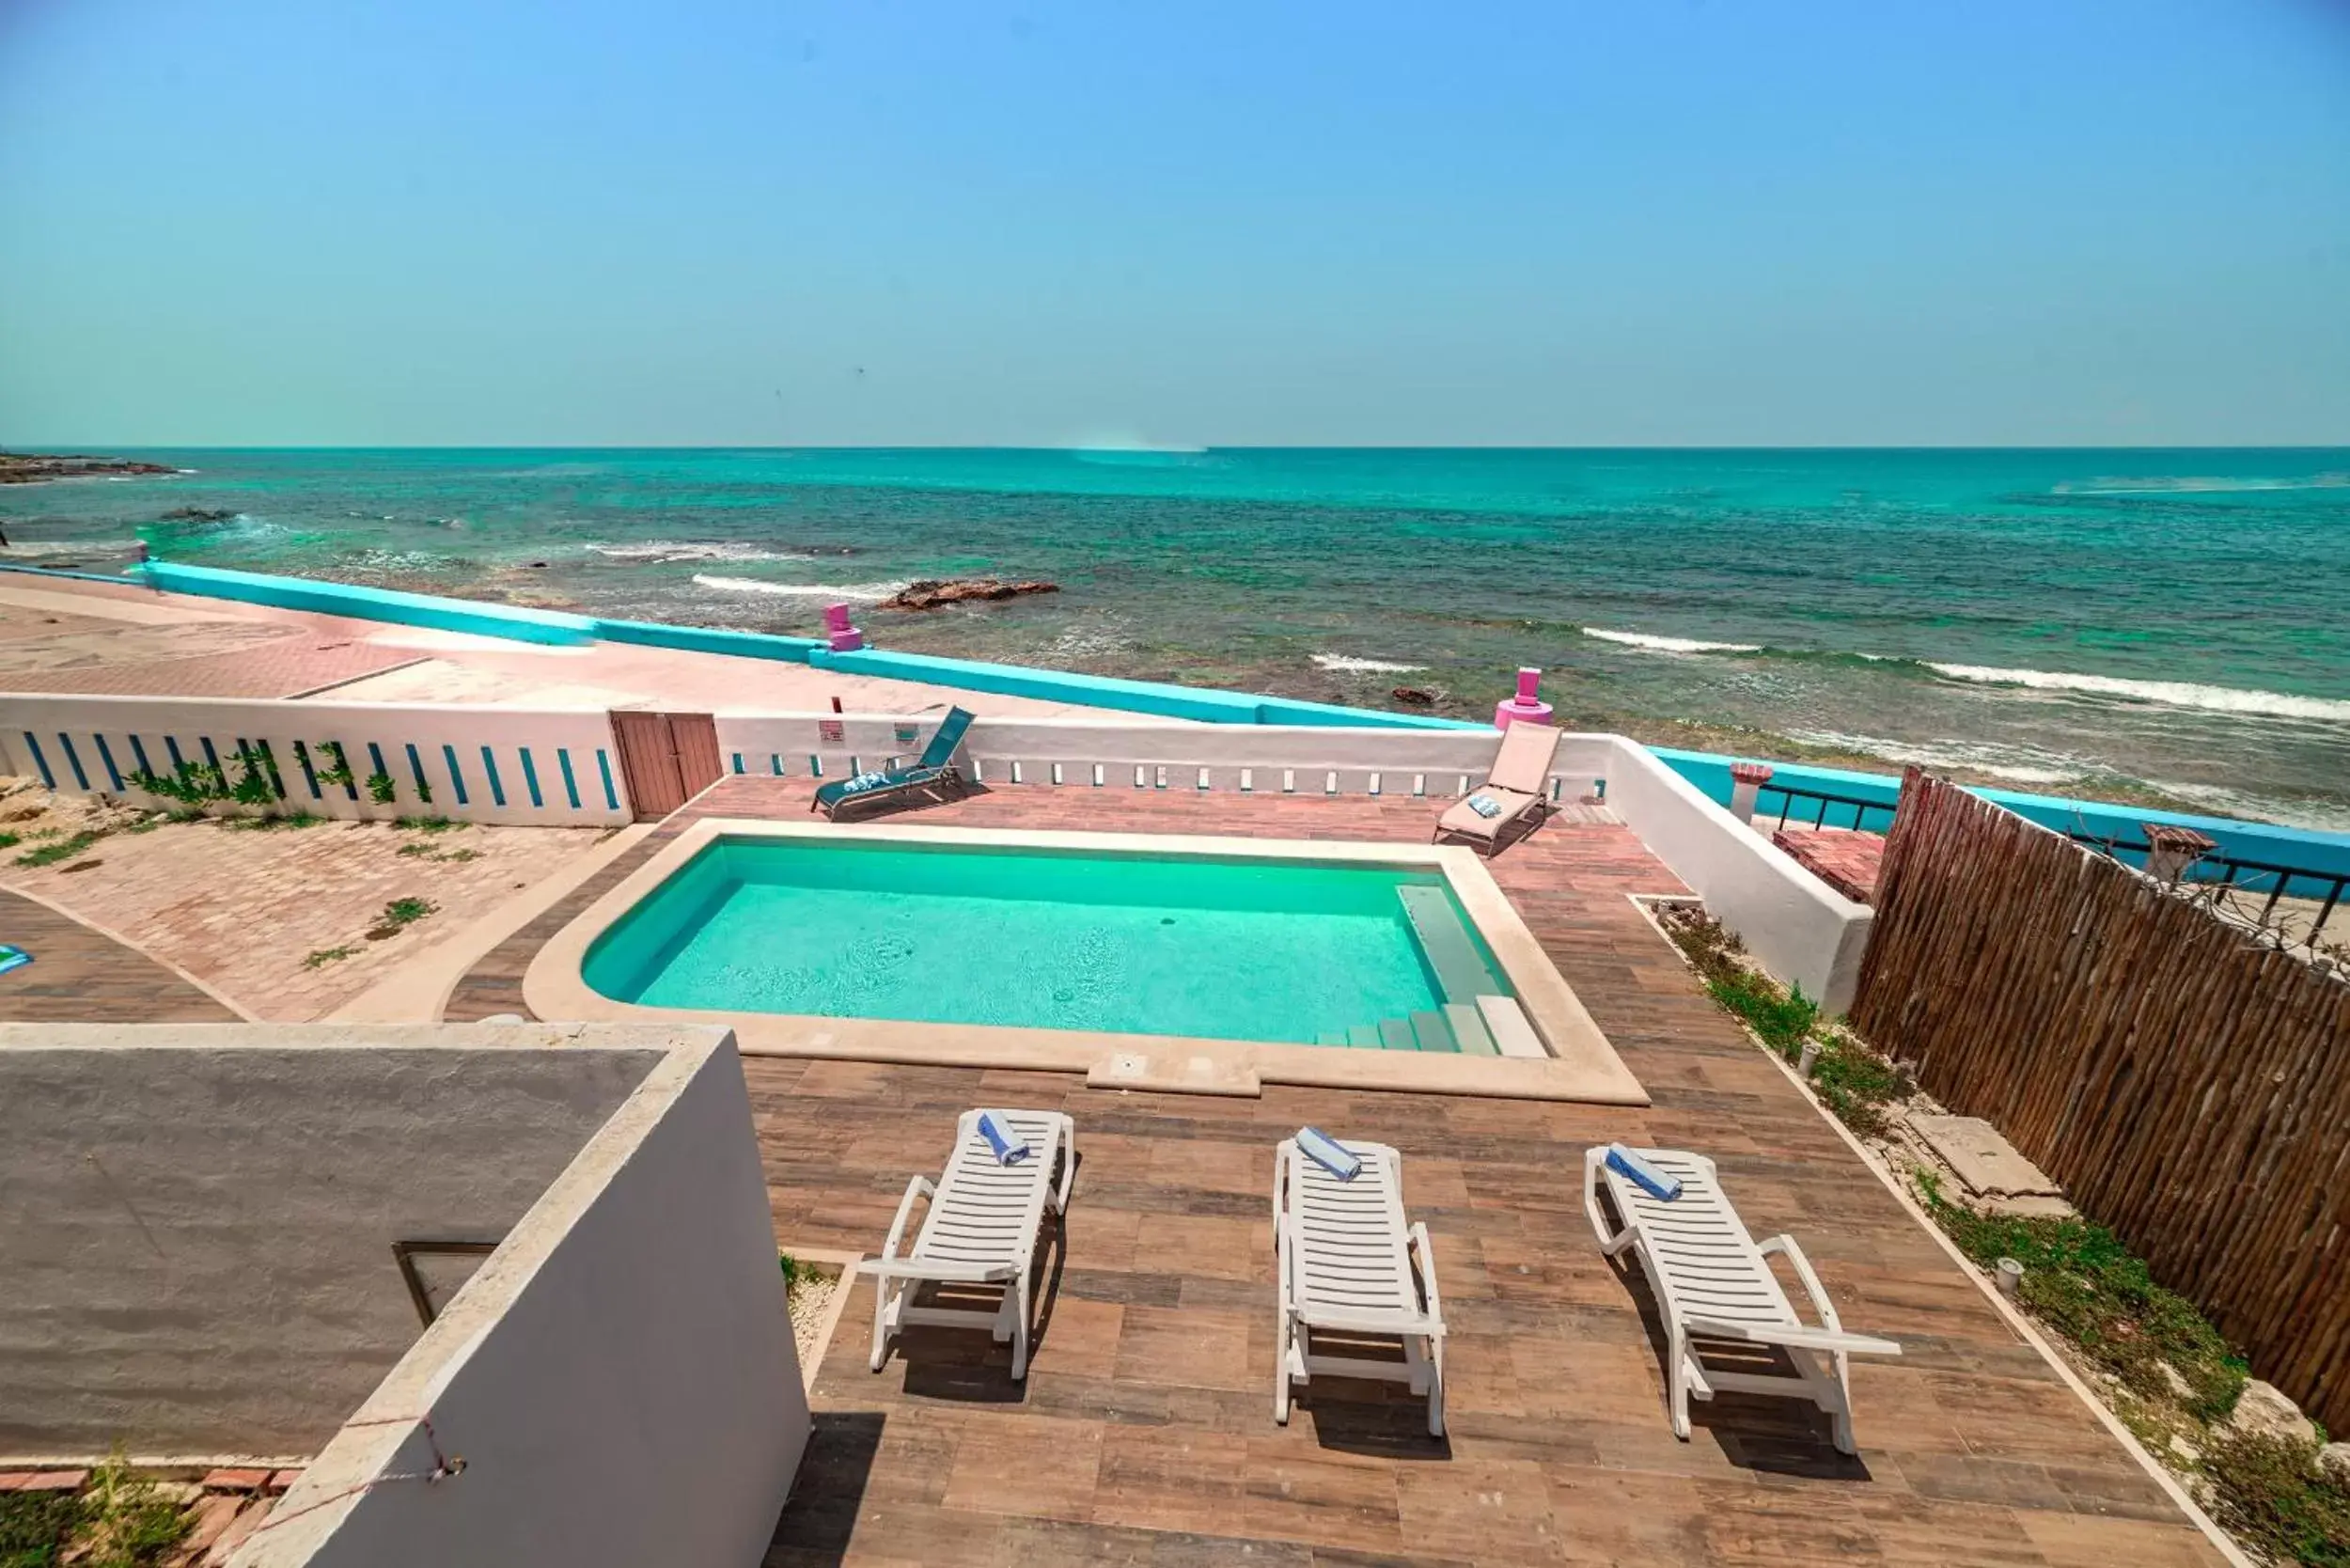 Location, Pool View in Hotel La Trigueña